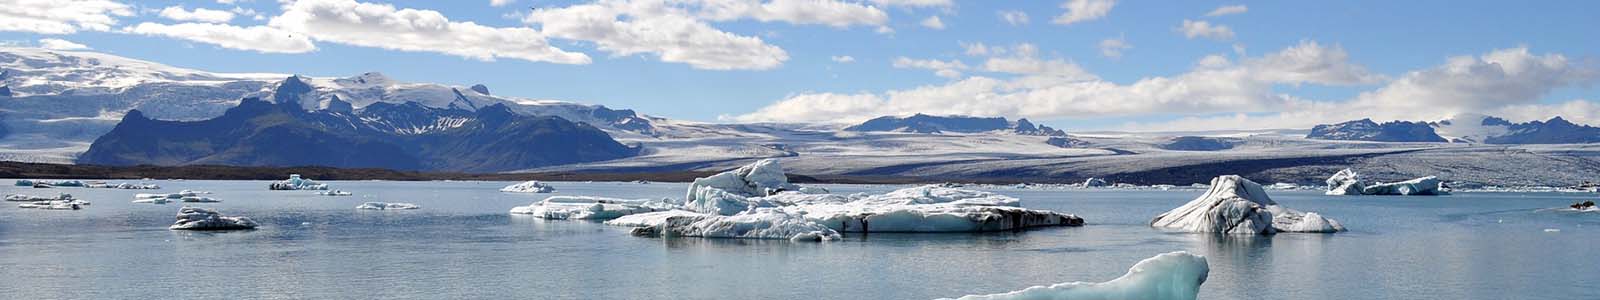 Jökulsárlón gletsjermeer, de grootste van IJsland